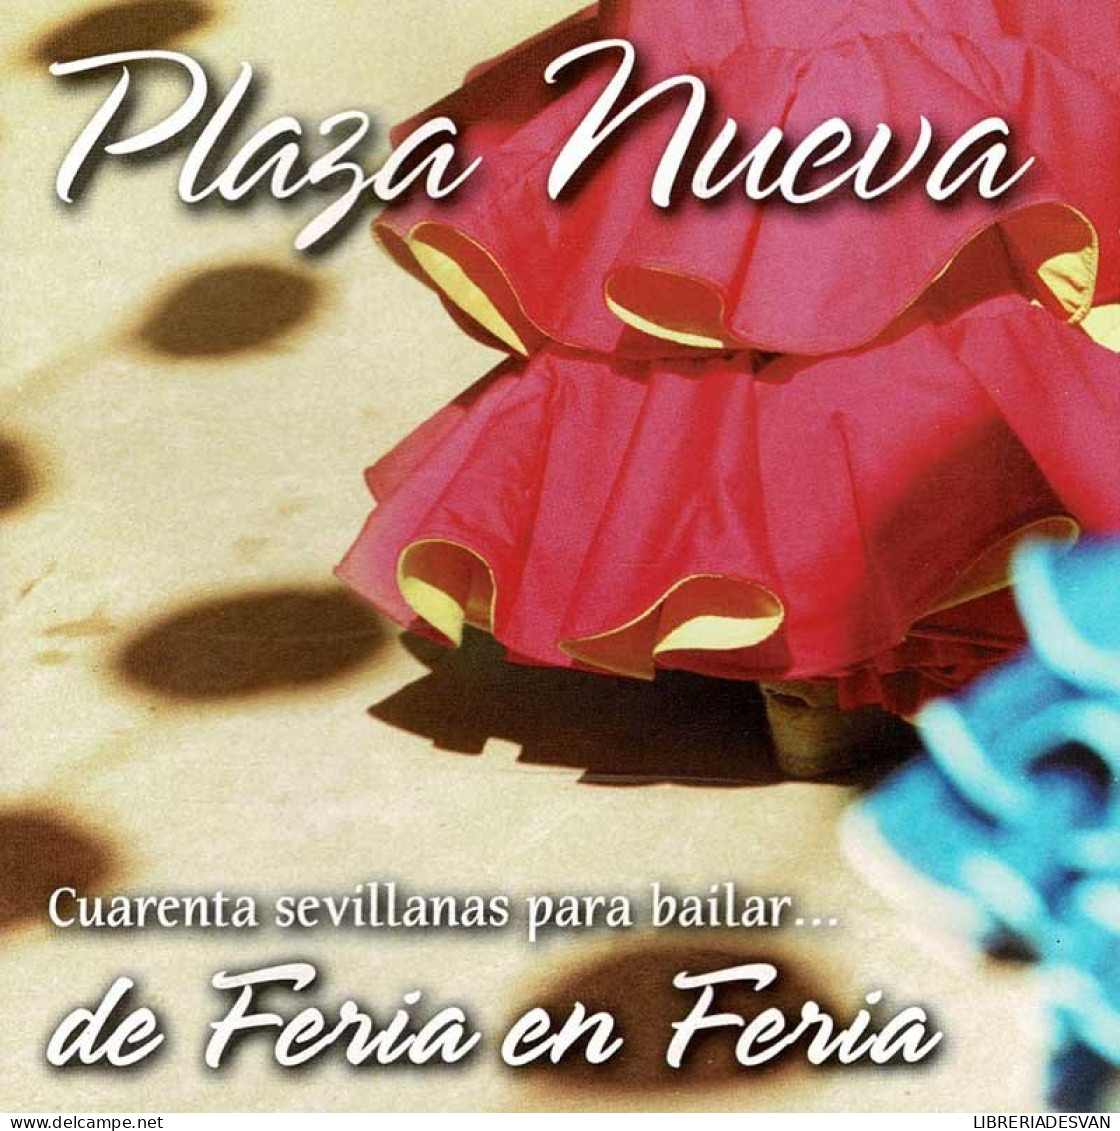 Plaza Nueva - De Feria En Feria. CD - Other - Spanish Music